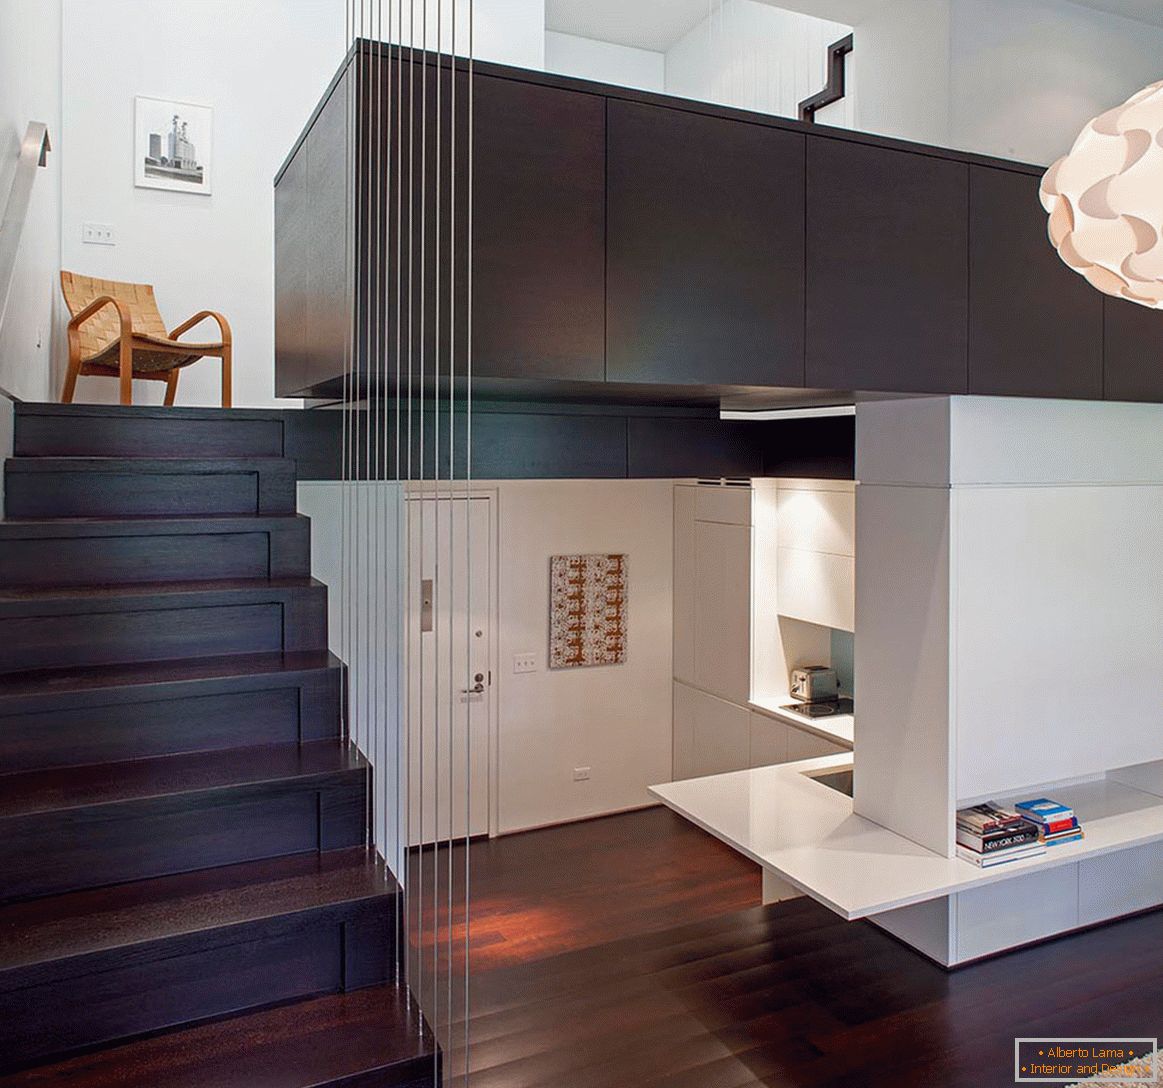 Design modern al unui mic apartament